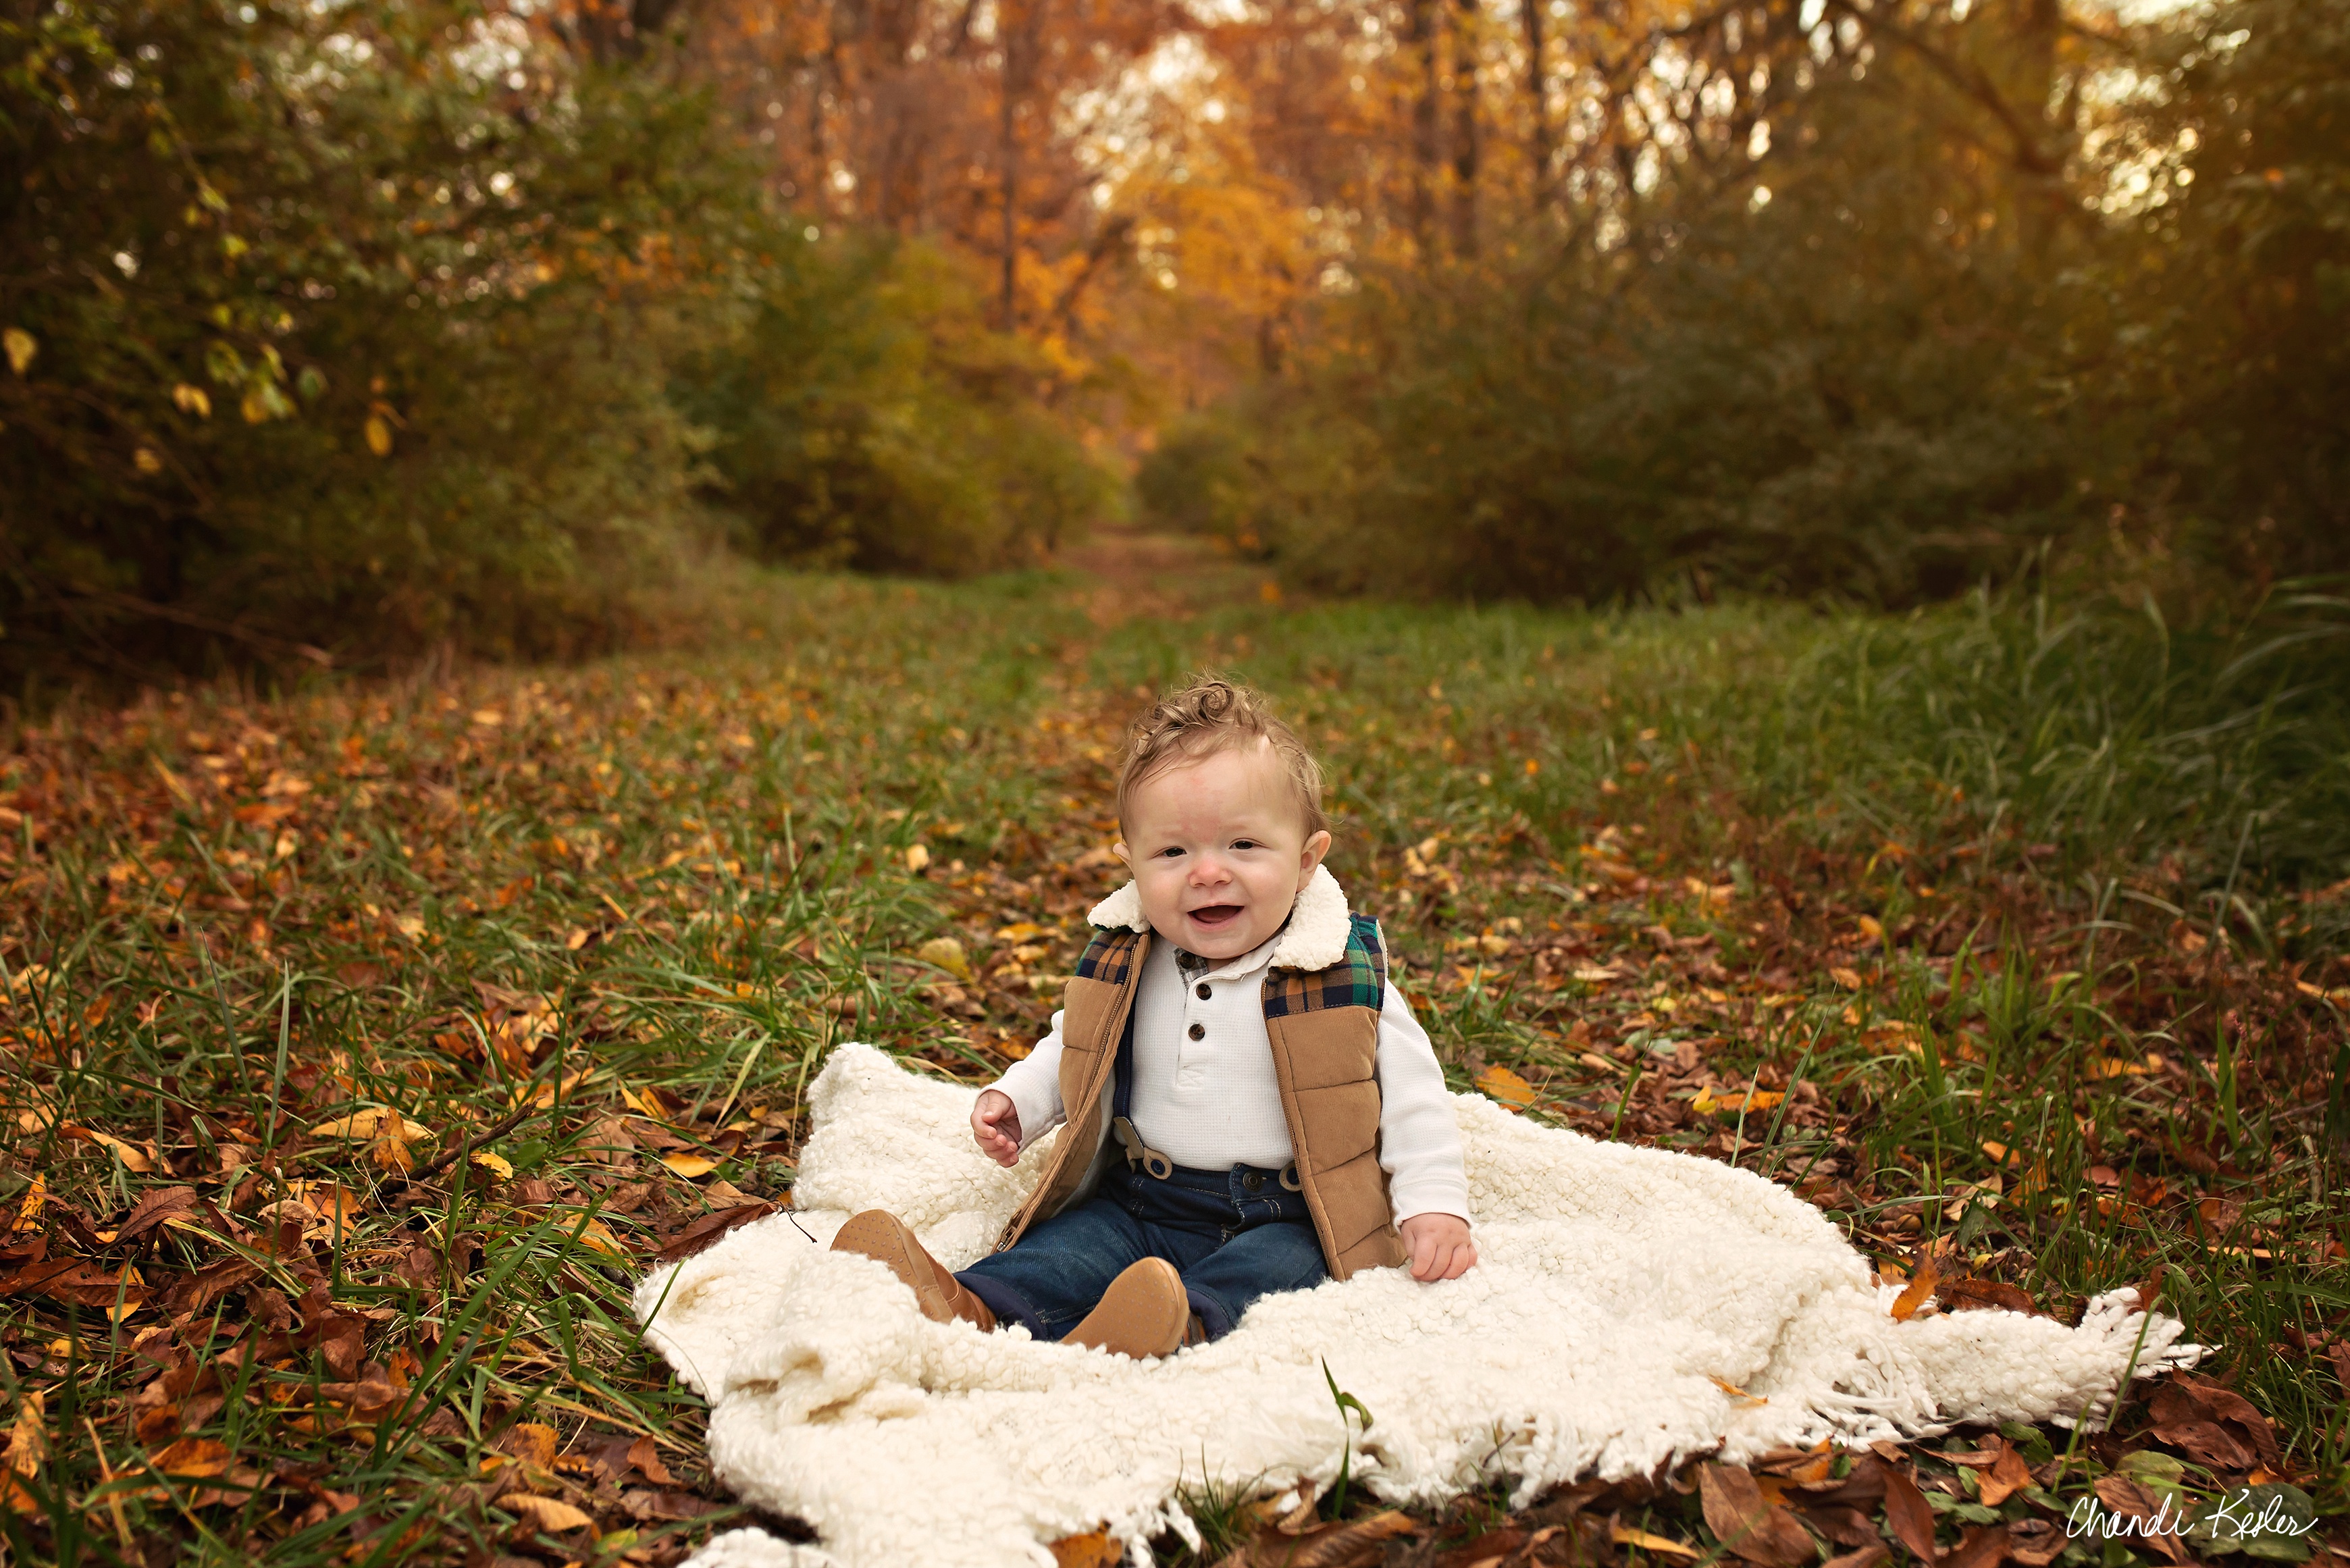 Pontiac IL Baby Photographer | Chandi Kesler Photography